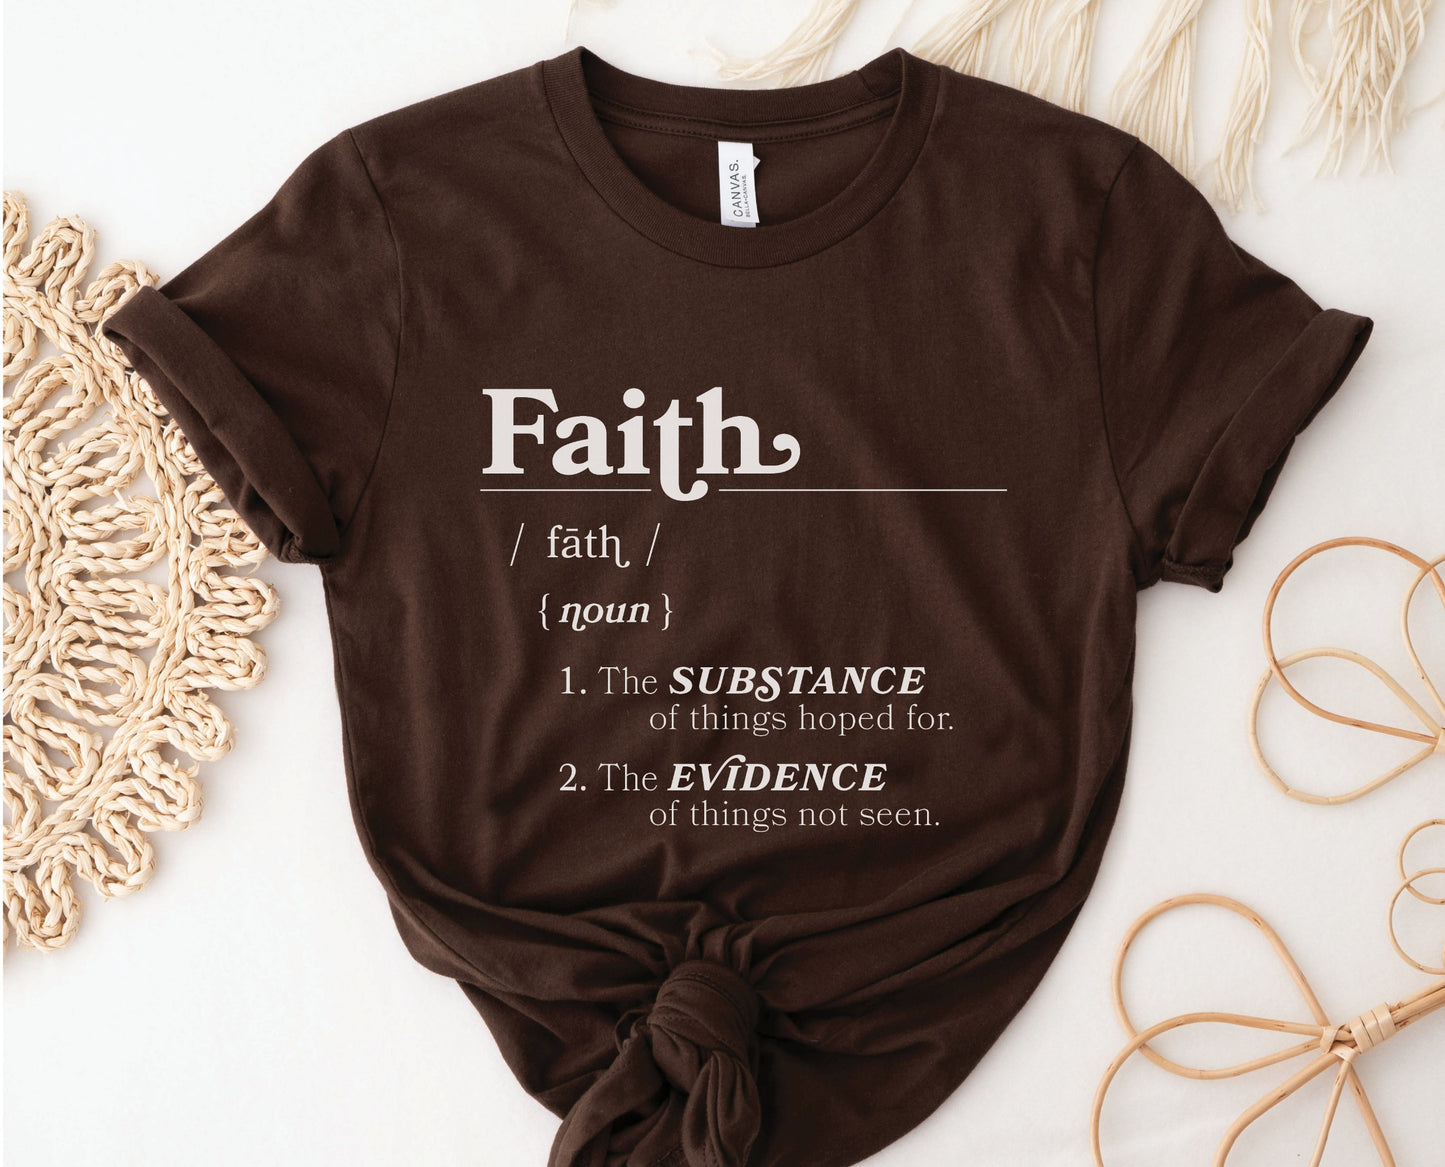 Faith Definition Hebrews 11:1 Christian aesthetic design printed in white on soft trendy brown unisex t-shirt for women and men